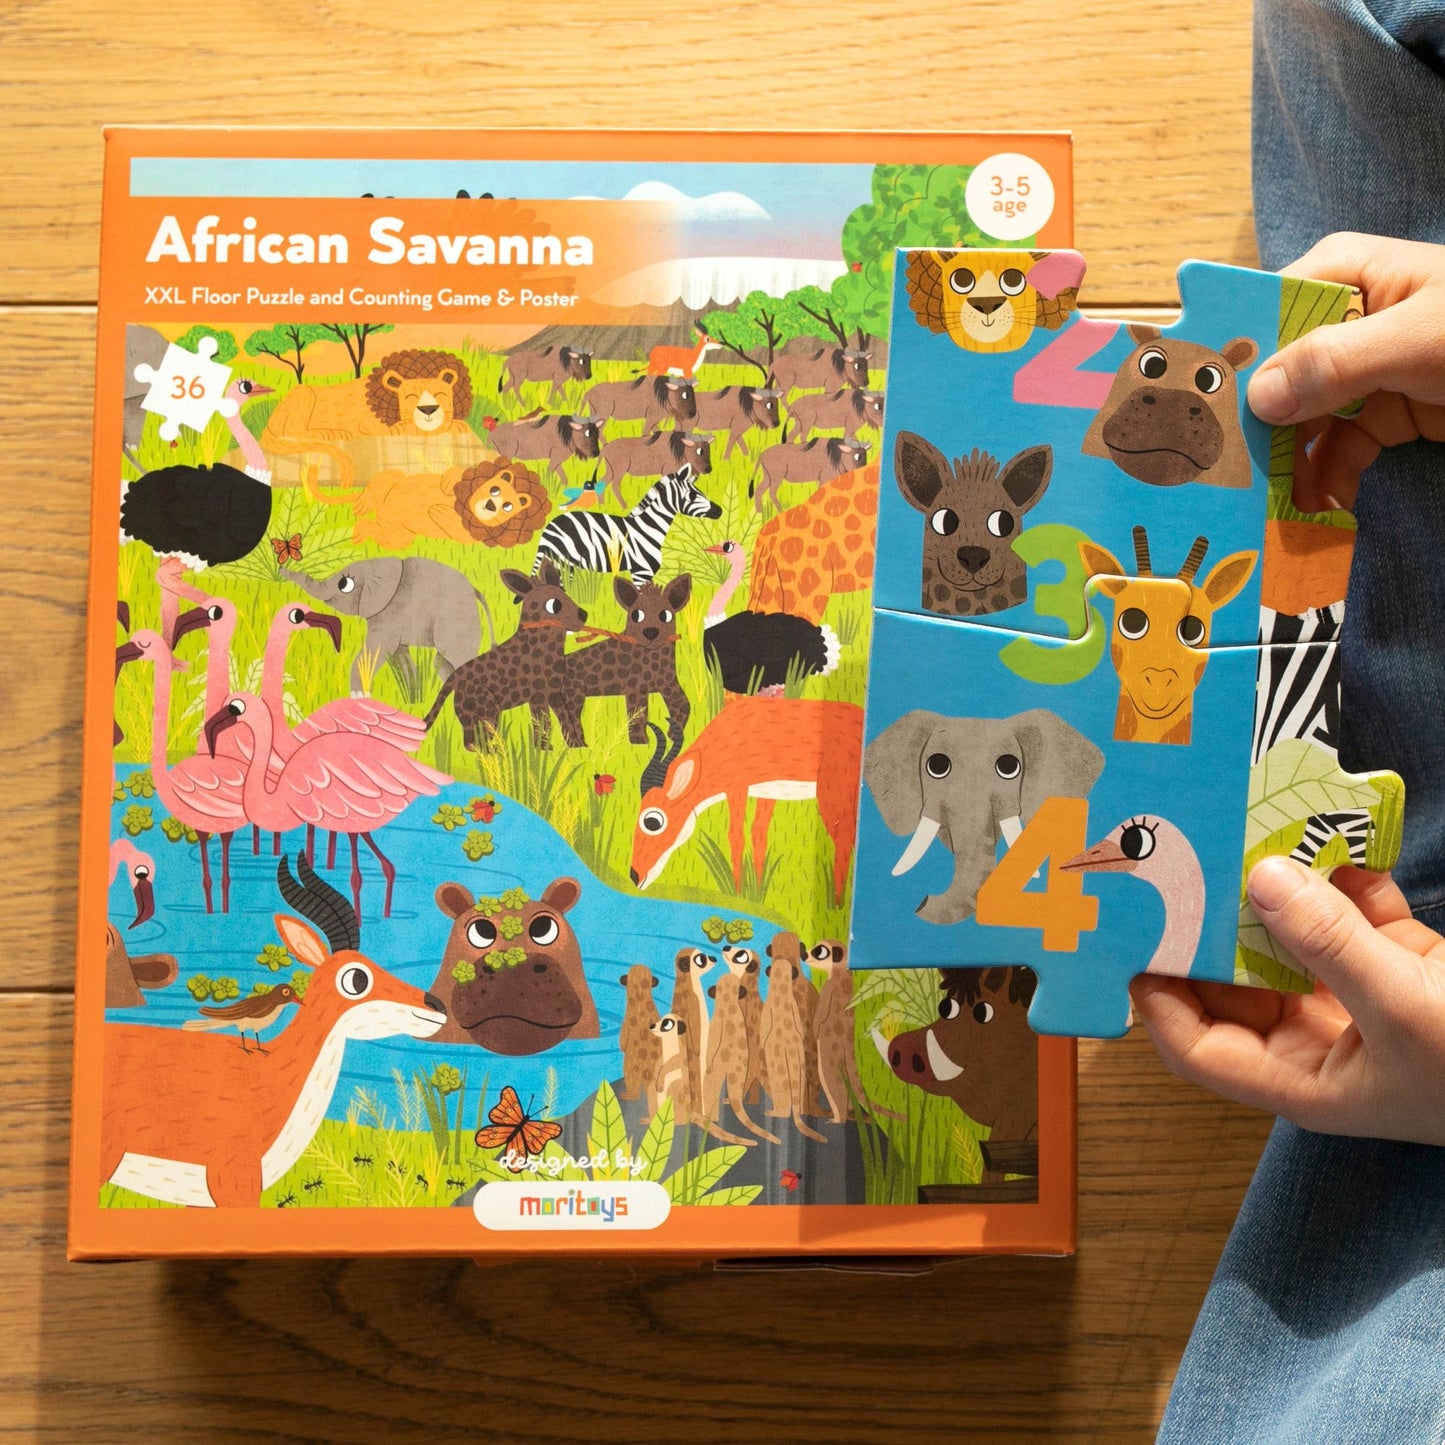 African Savanna - 36 Parça XXL Dev Puzzle, Gözlem ve Sayma Oyunu & Posteri moritoys 